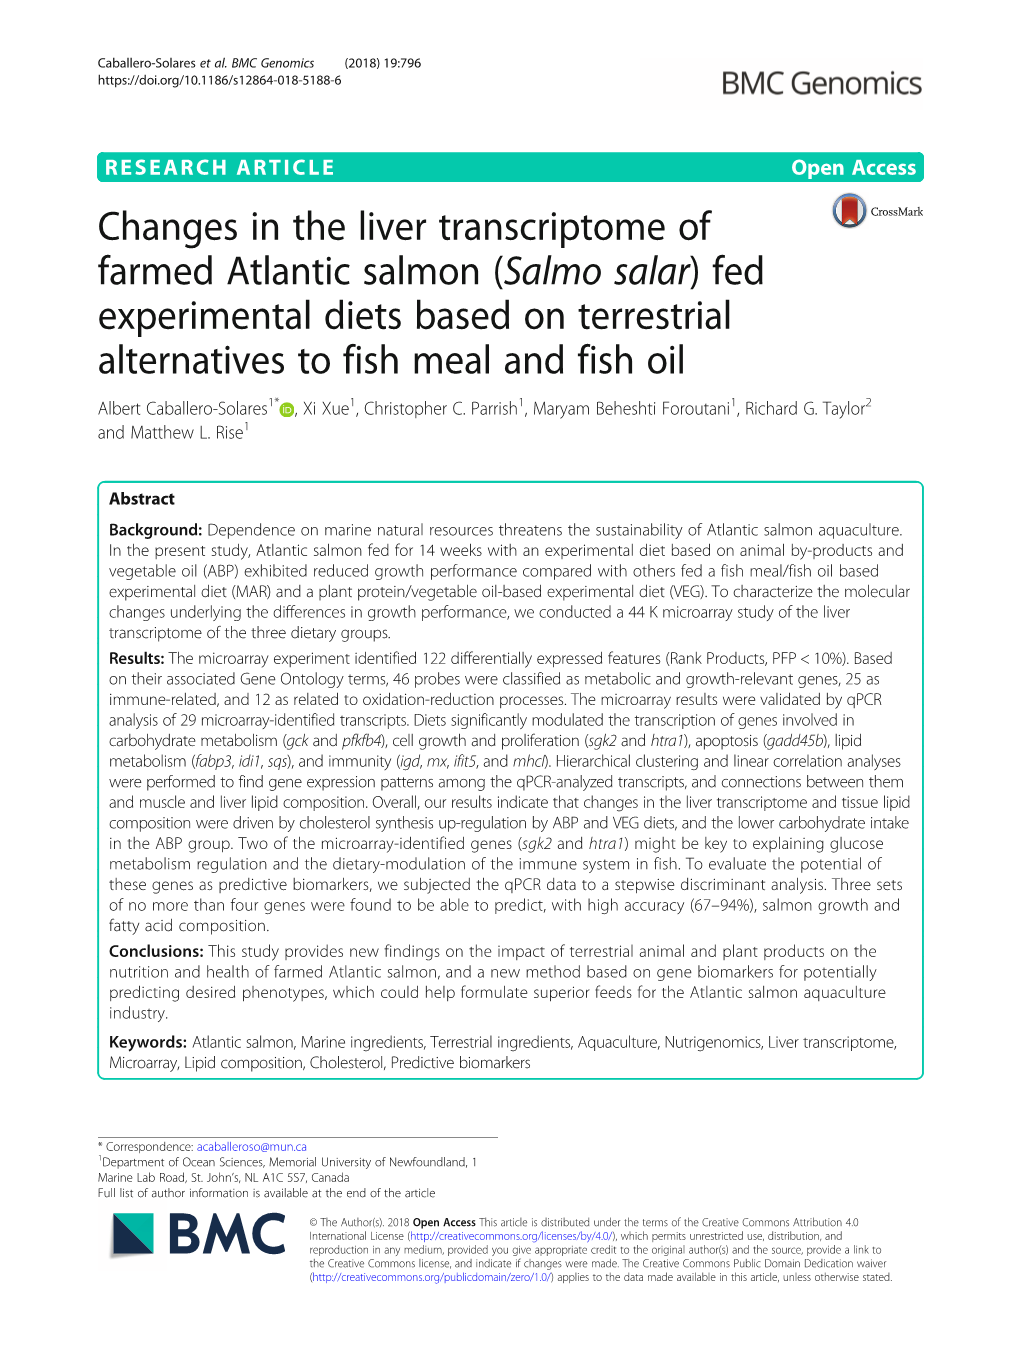 Changes in the Liver Transcriptome of Farmed Atlantic Salmon (Salmo Salar)